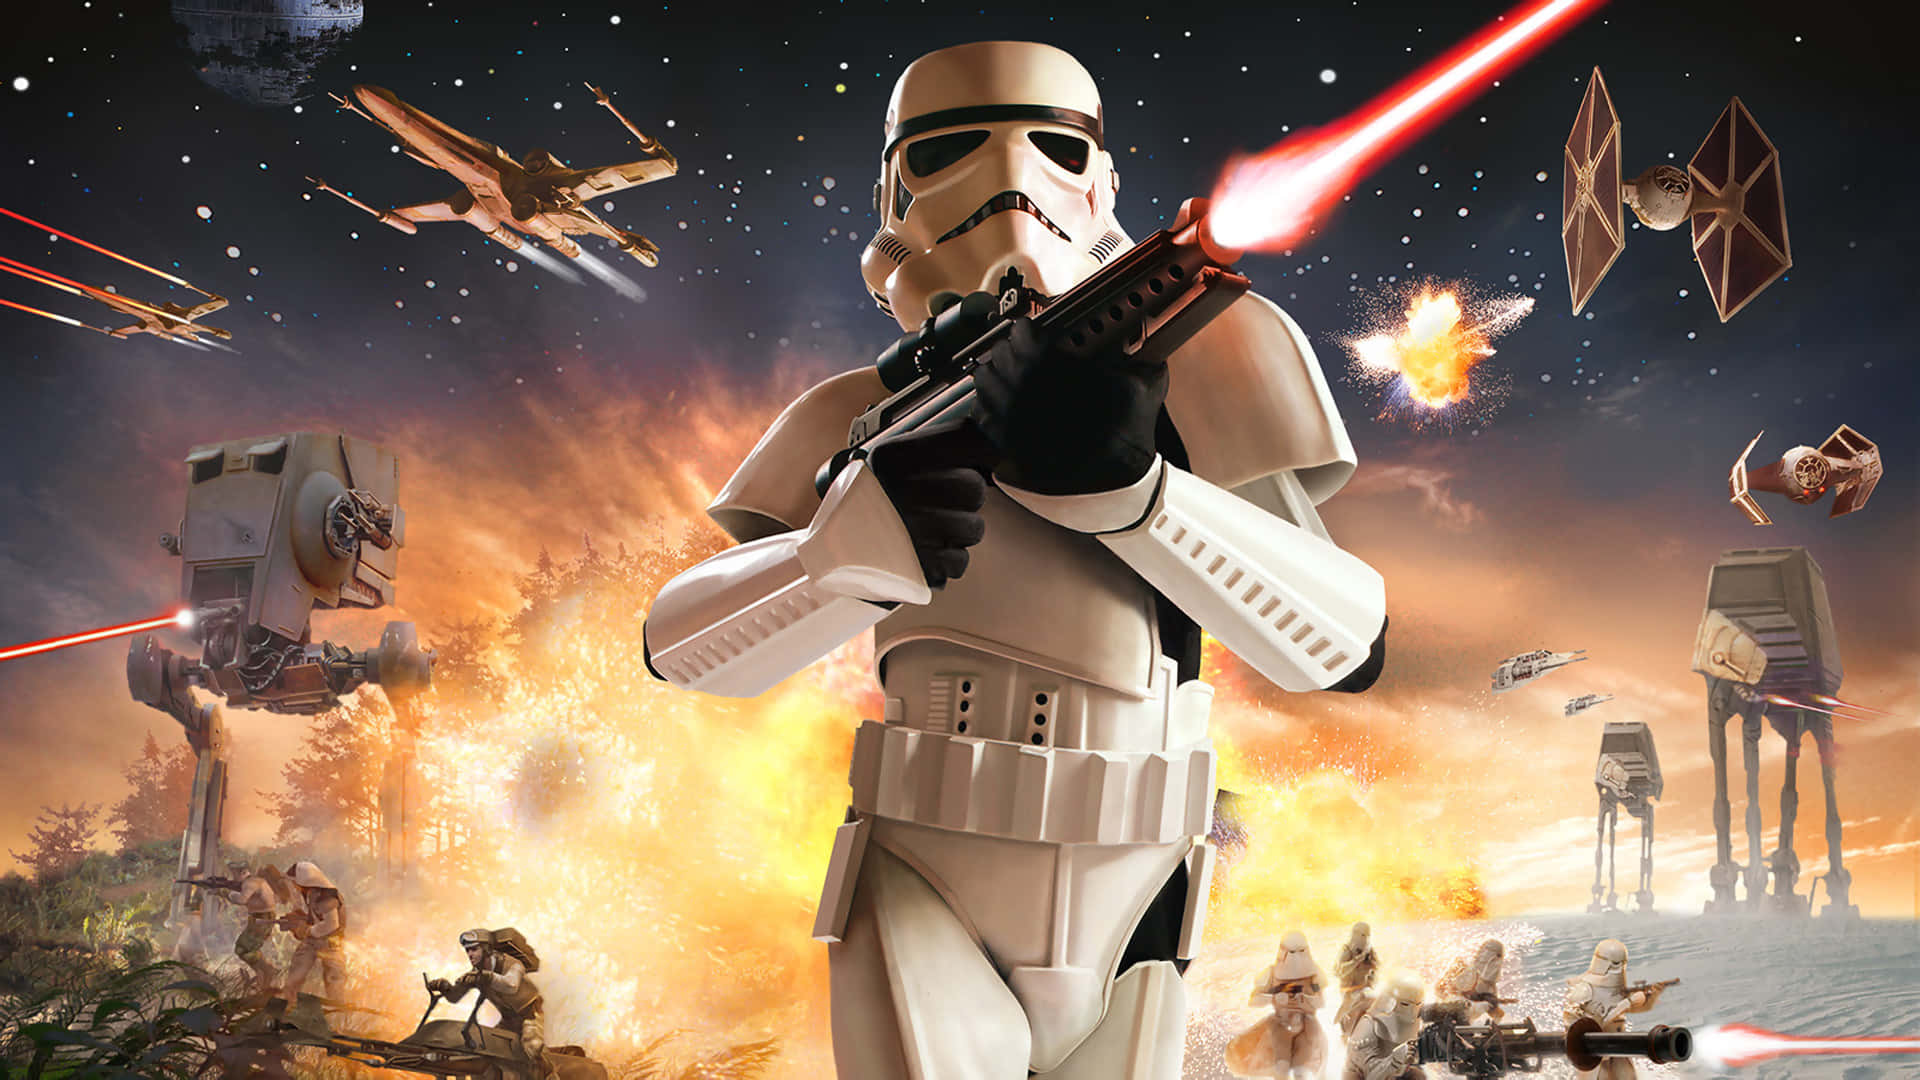 Intense Star Wars Battle Scene in Stunning Video Game Graphic Wallpaper